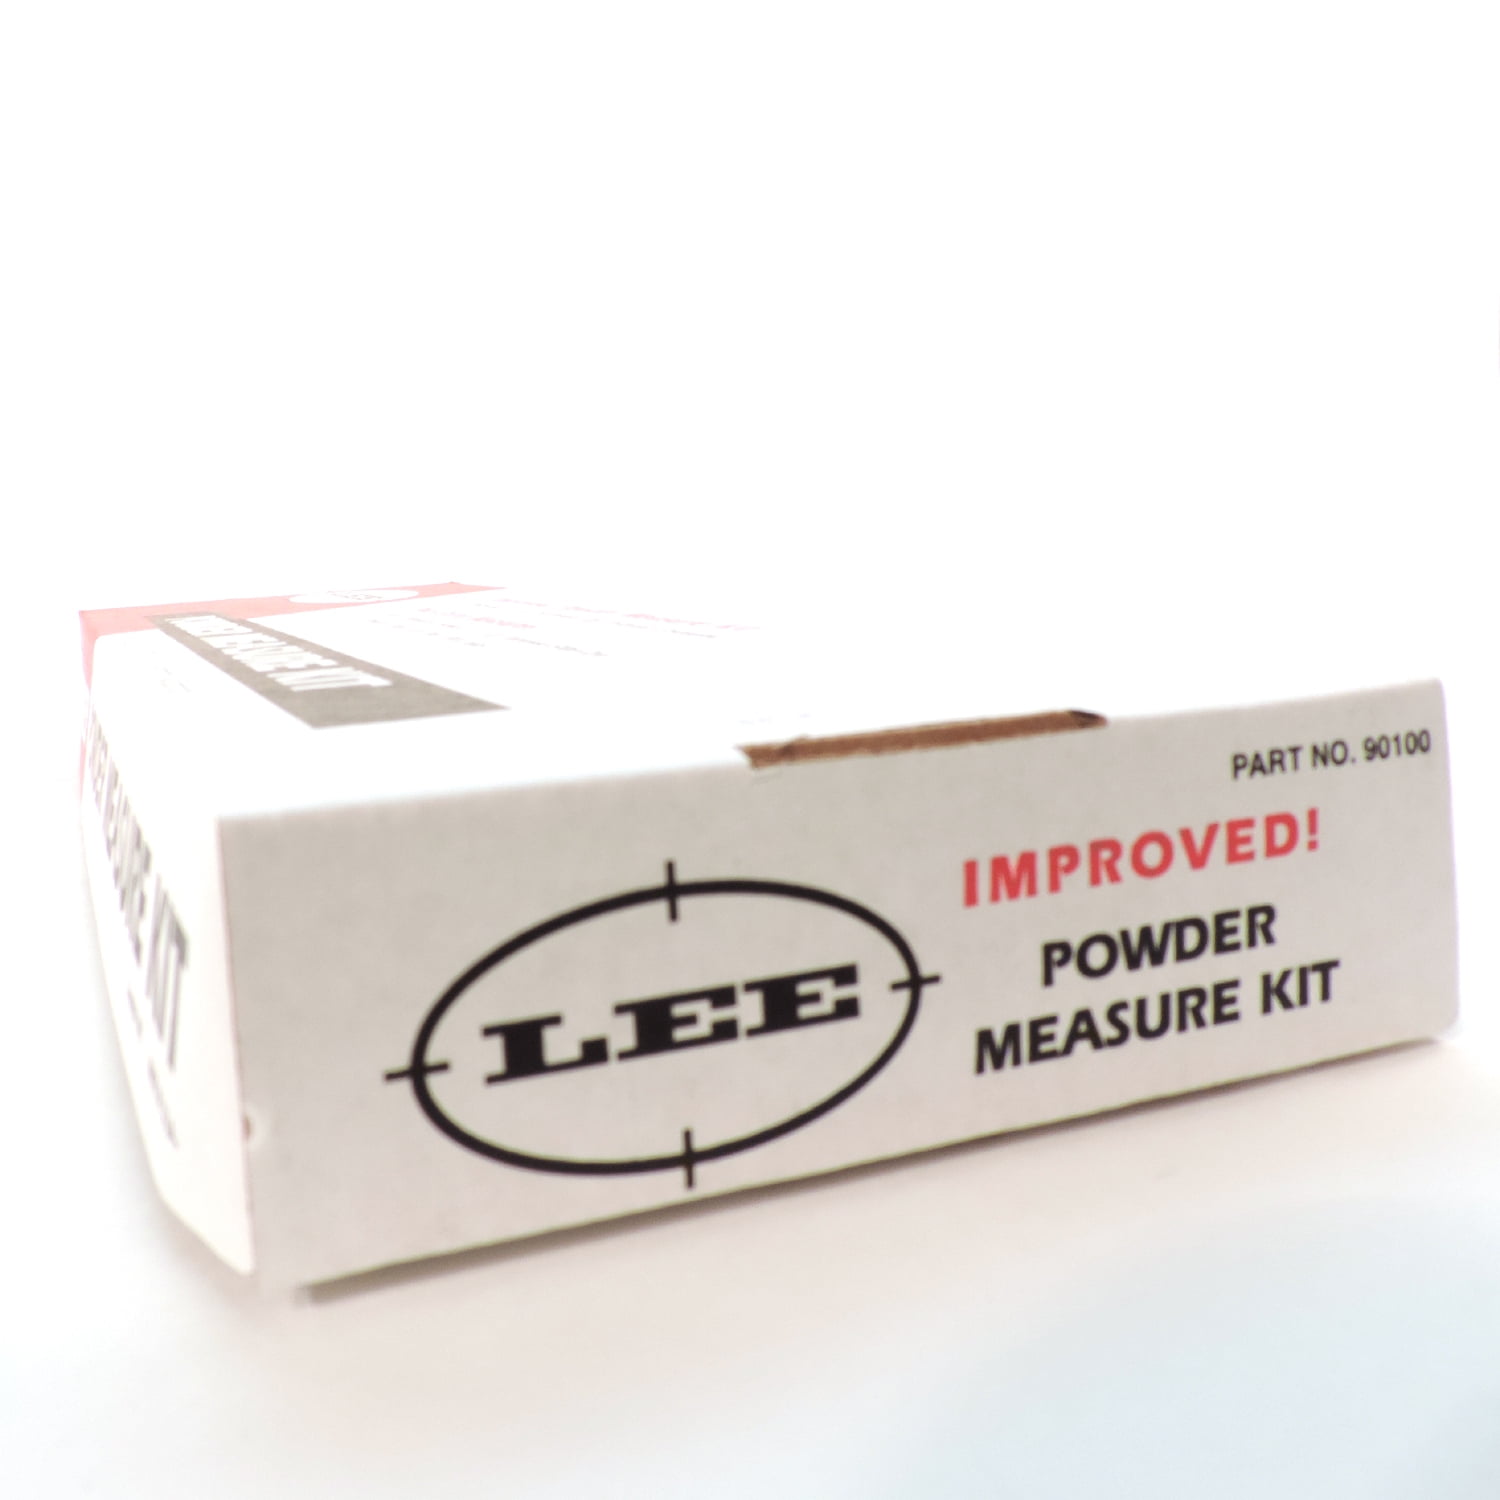 Details about   Lee Improved Powder Measure Kit~90100 